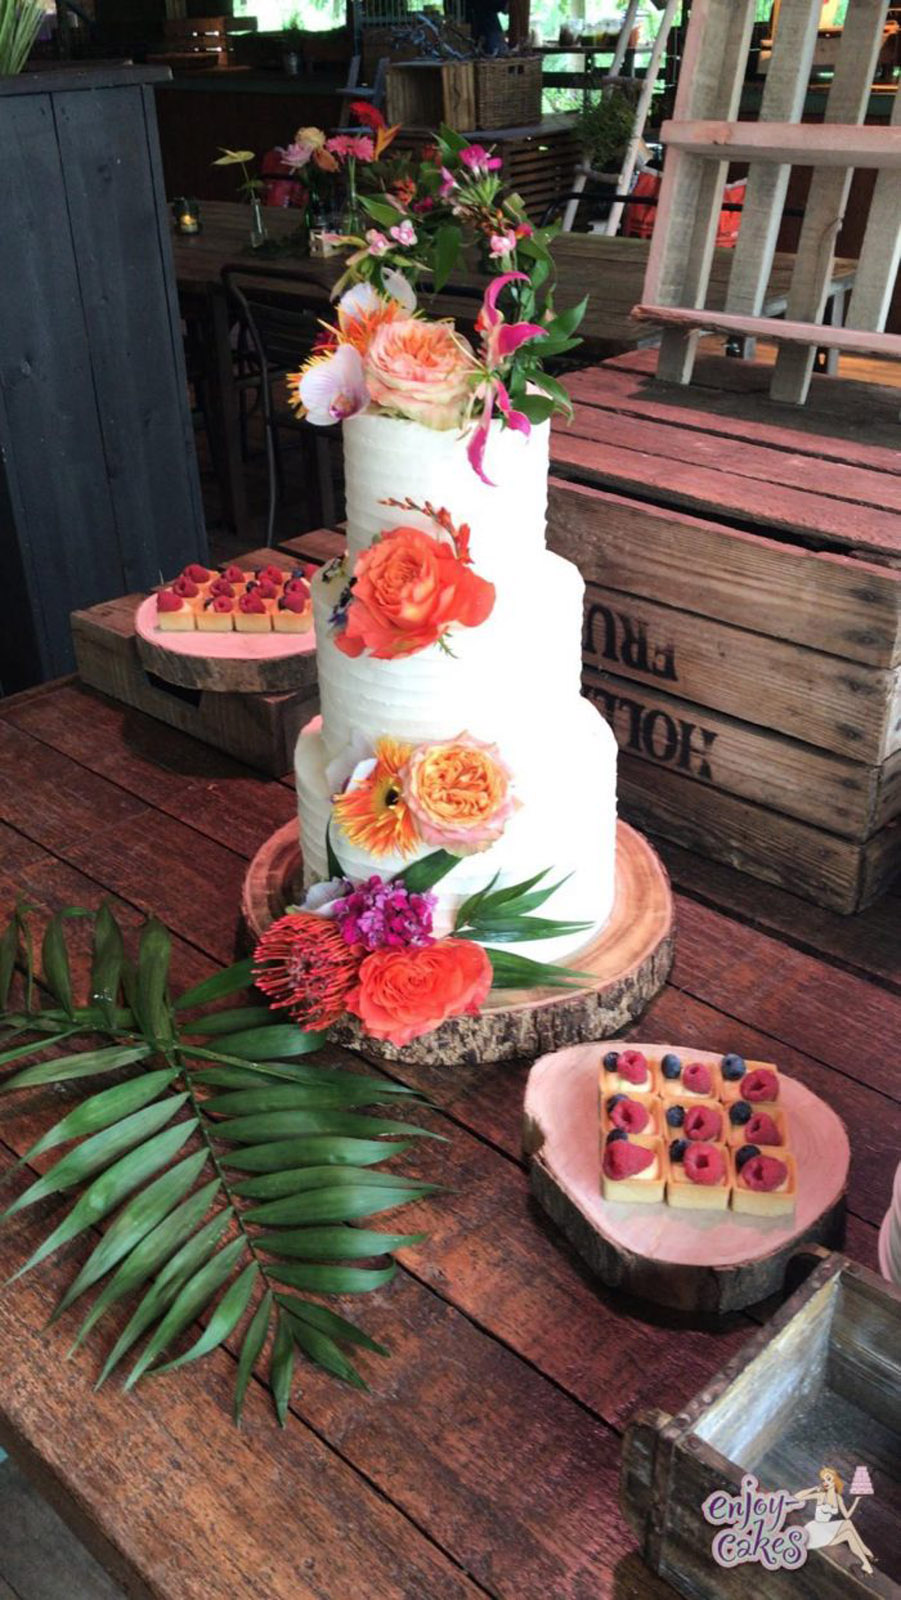 Tropical wedding cake